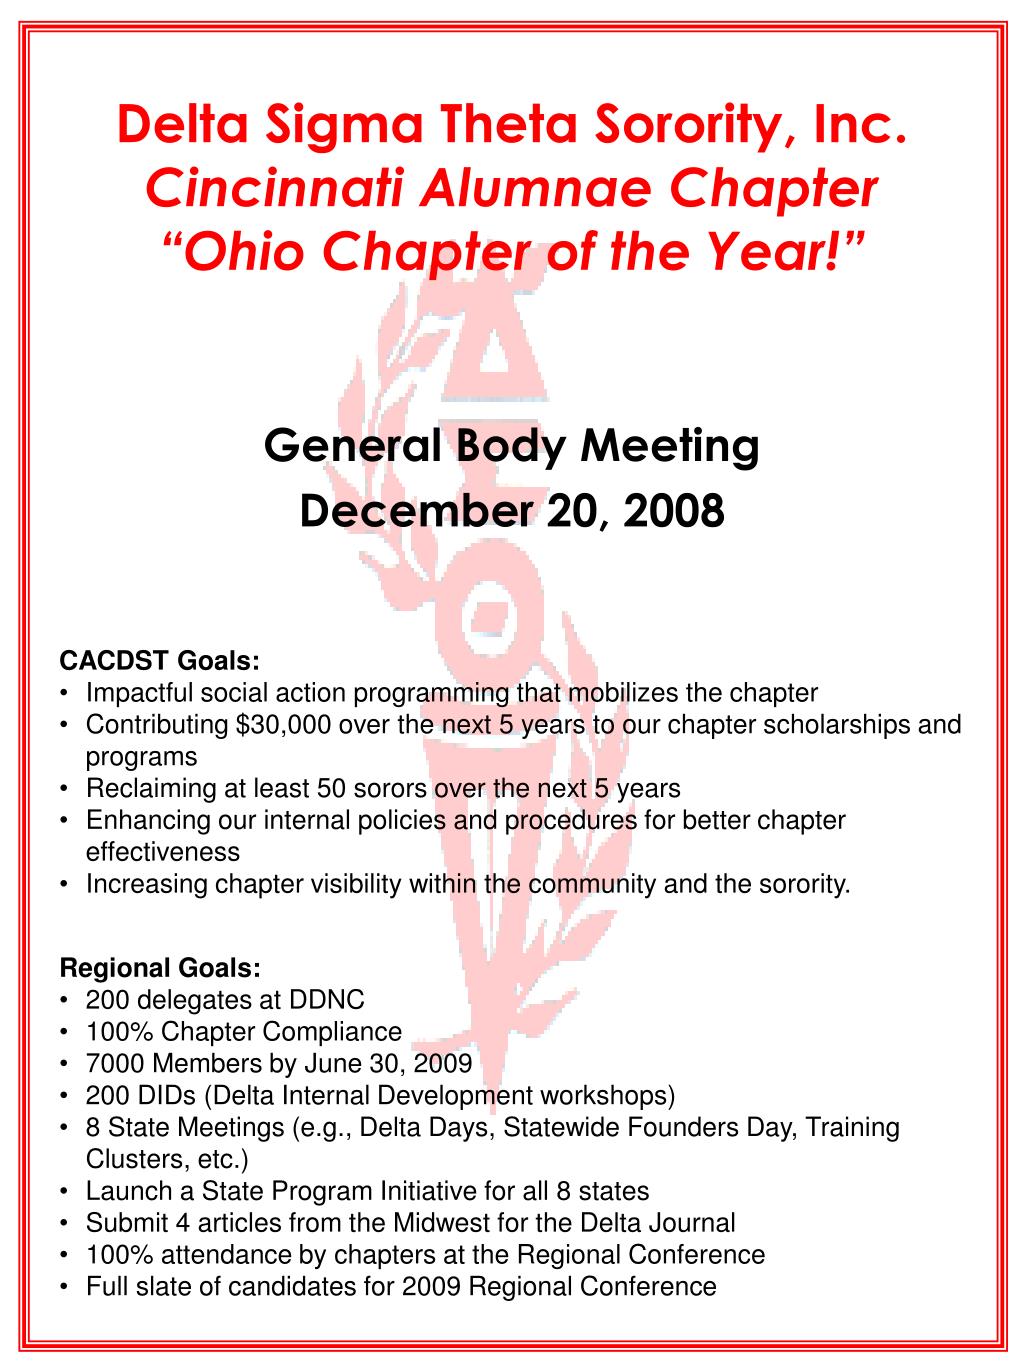 PPT Delta Sigma Theta Sorority, Inc. Cincinnati Alumnae Chapter “Ohio